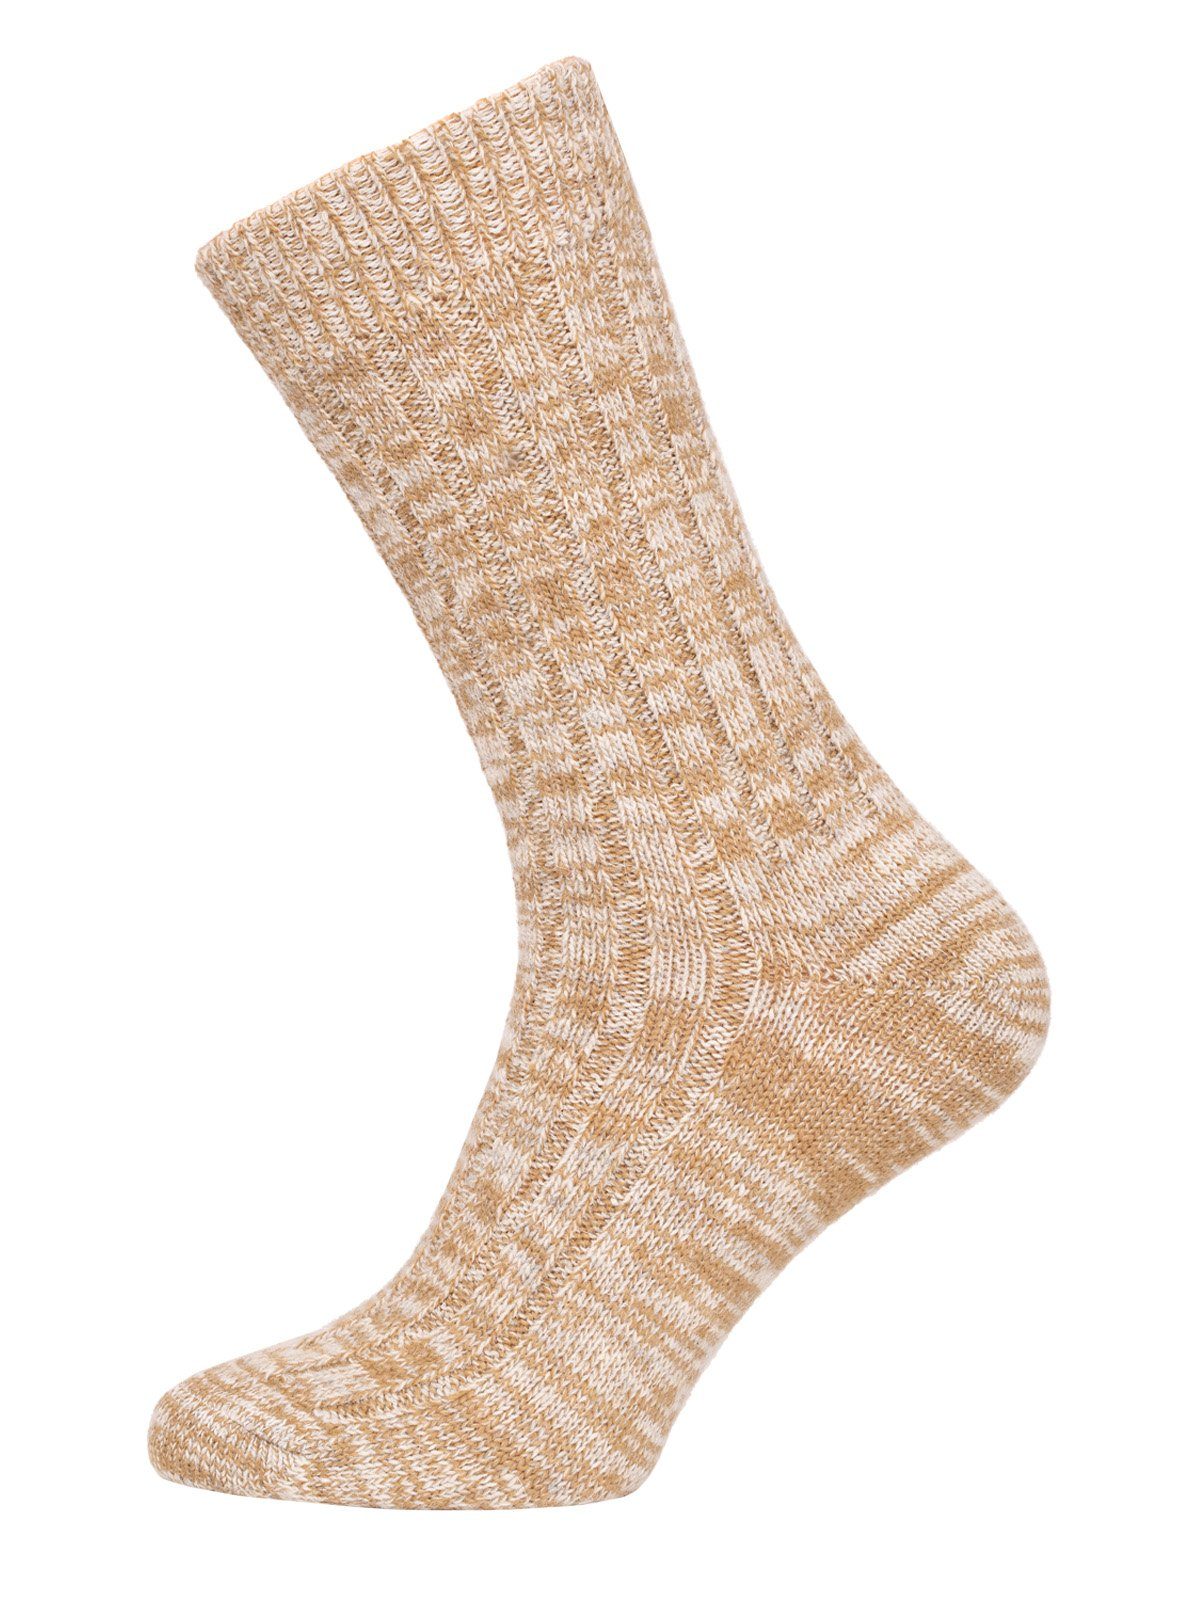 HomeOfSocks Socken Melierte Wollsocken aus 75% Wolle (Schurwolle) (Paar, 1 Paar) Dünne und warme Wollsocken mit 75% Wollanteil Camel